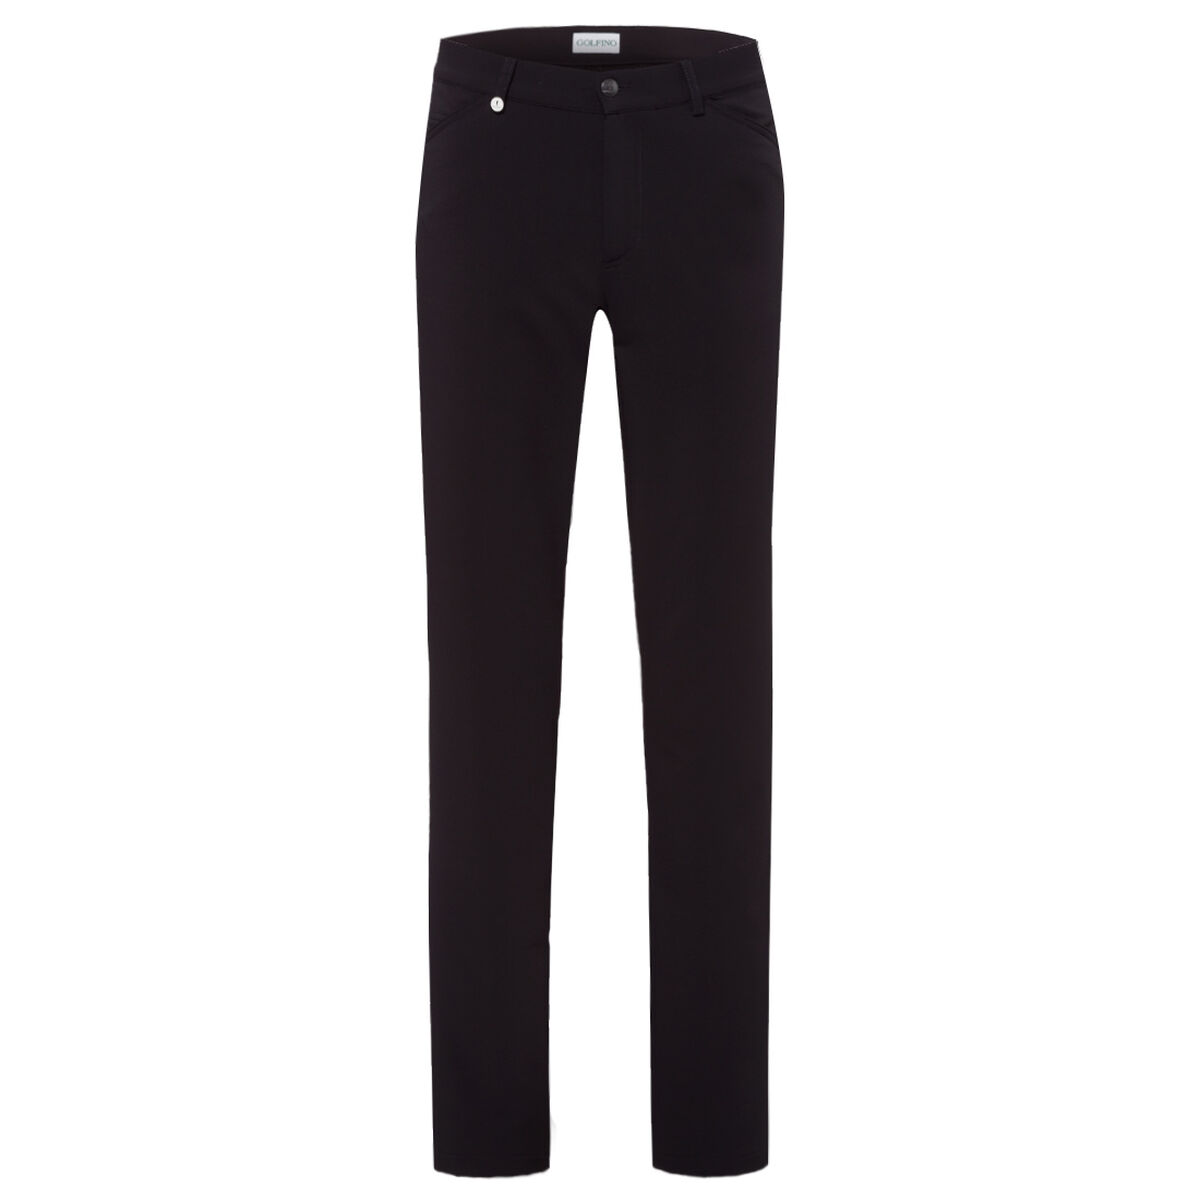 Pantalon GOLFINO 4-Way Stretch Hose, homme, Longue, Noir, 40 | Online Golf